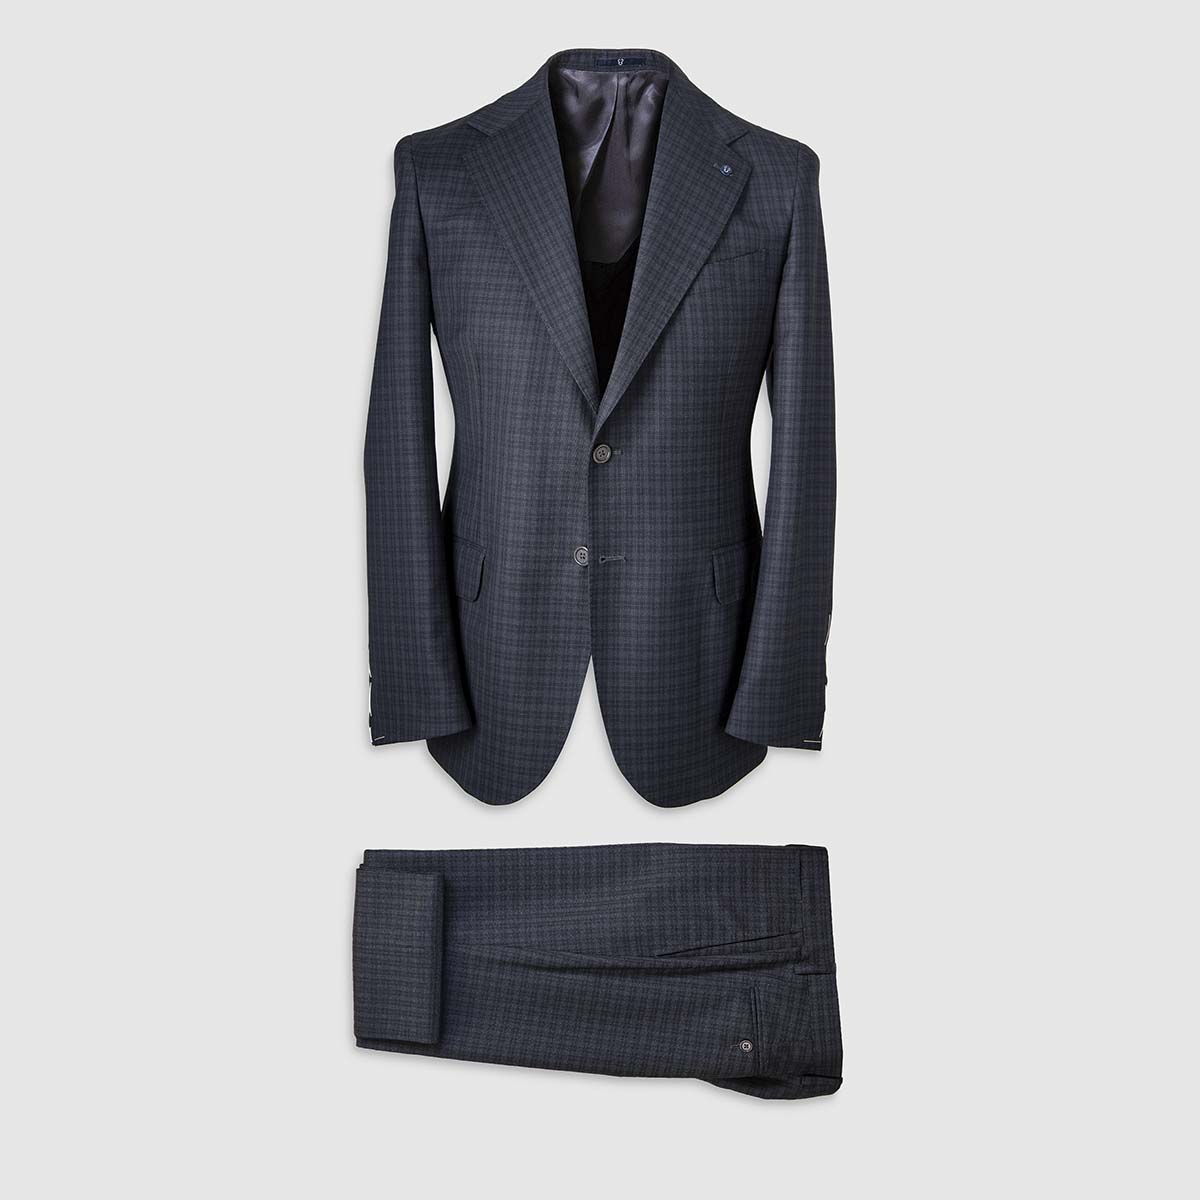 Brò-Saint-Maloù Suit in 130s Four Season Wool Melillo 1970 on sale 2022